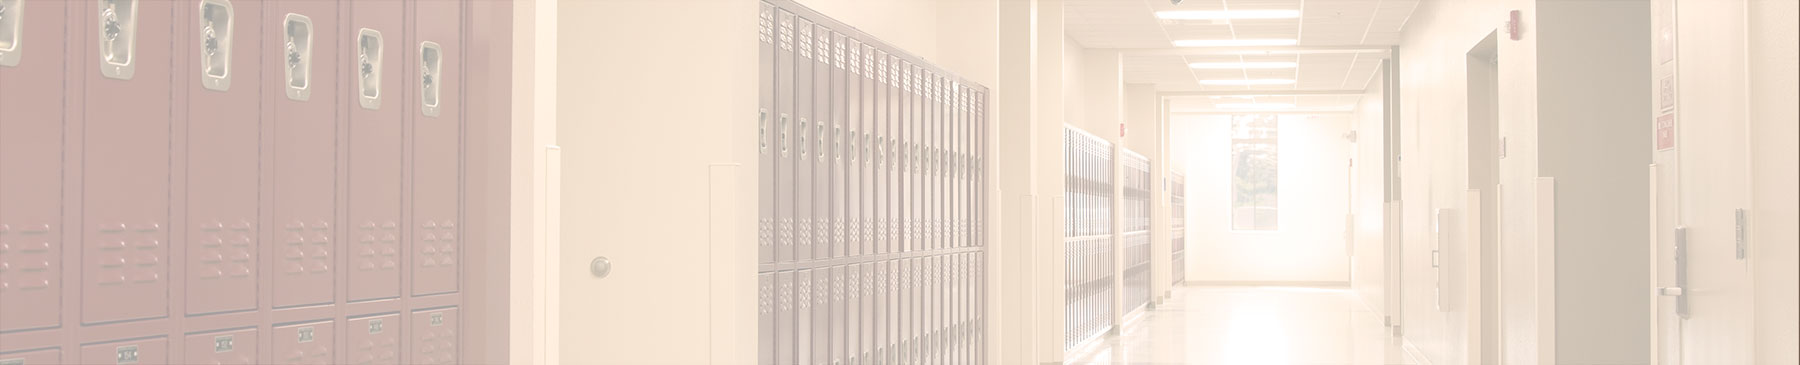 high school hallway with lockers